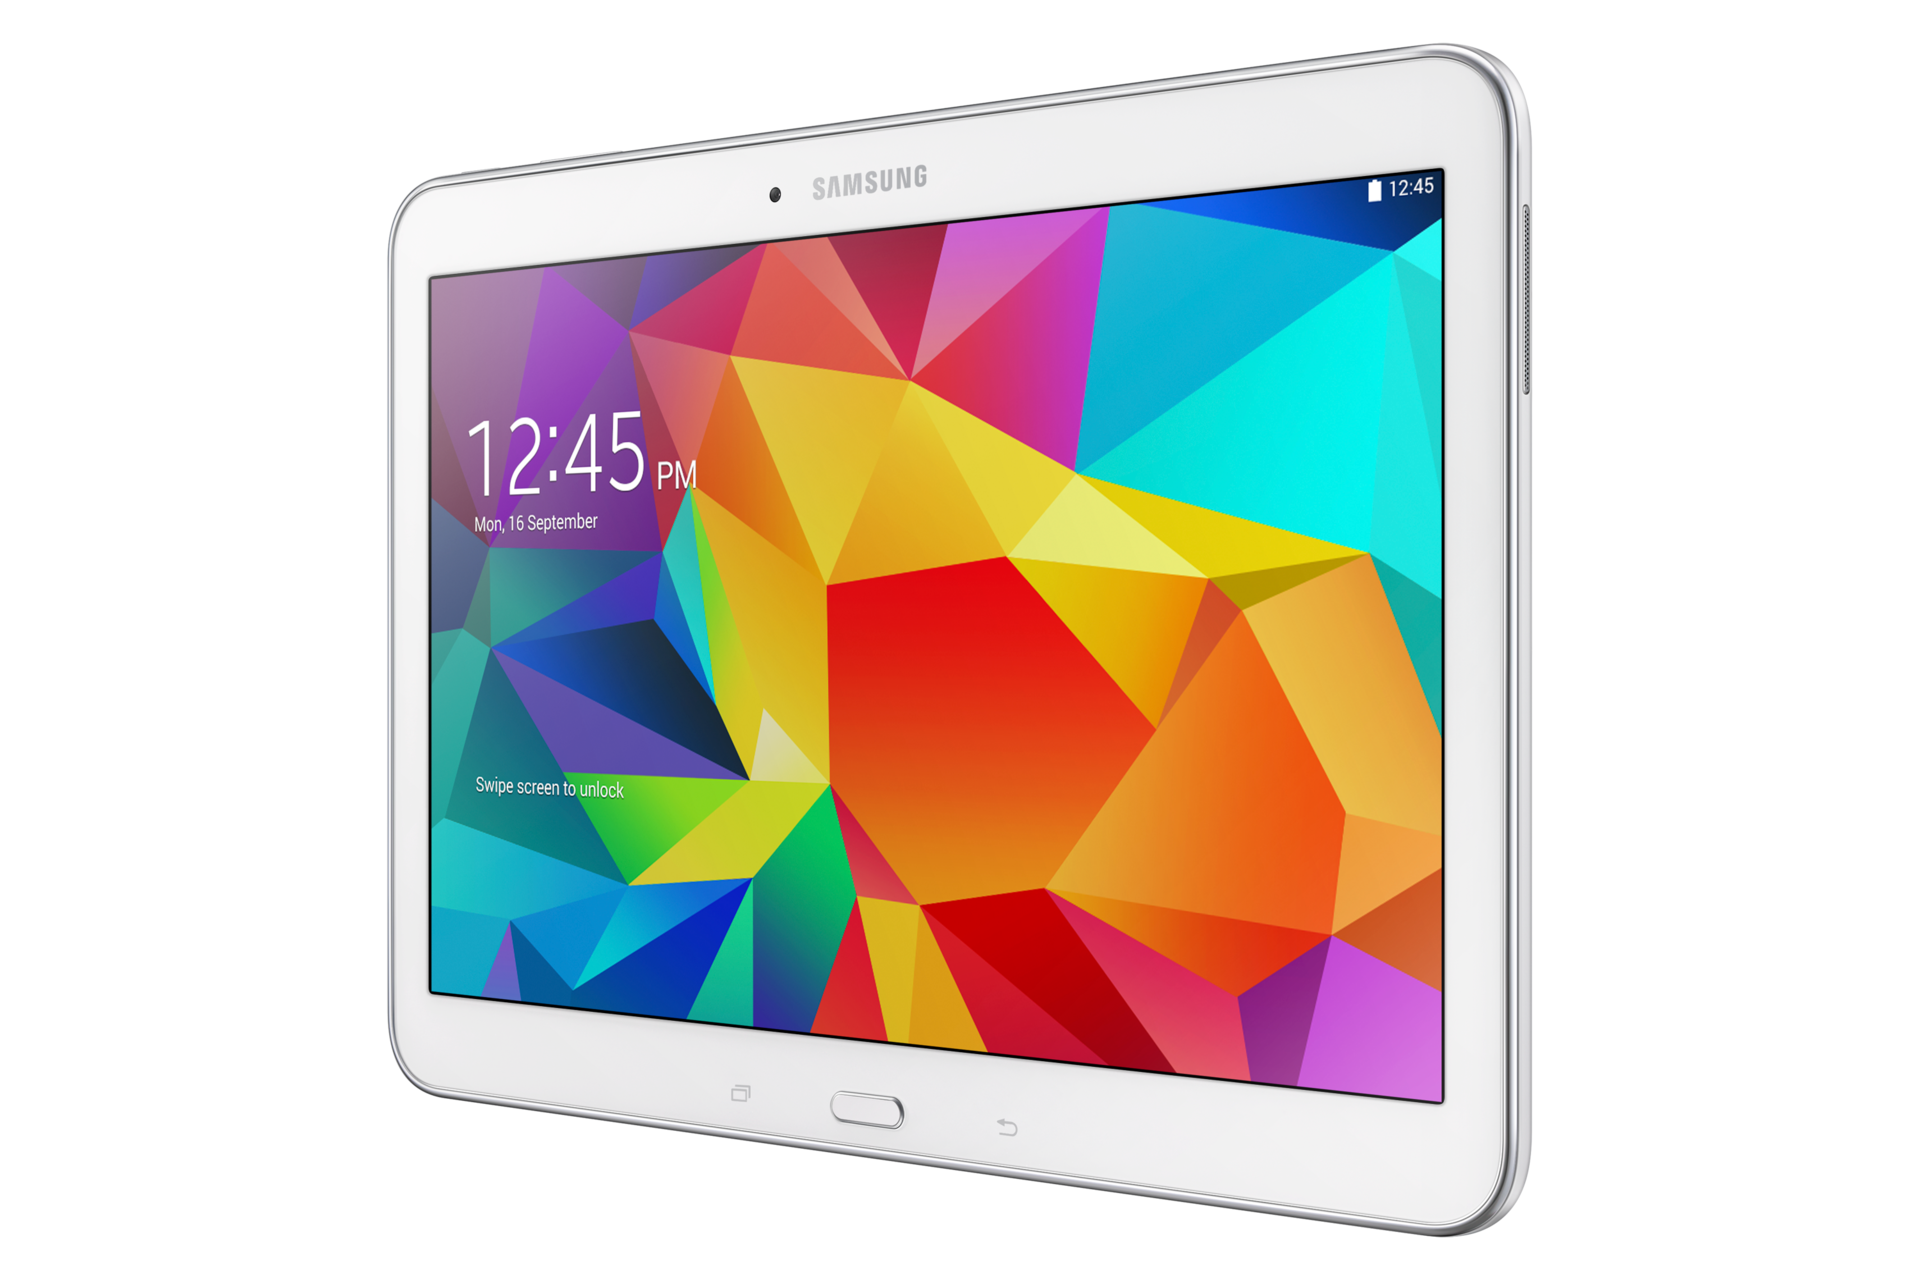 Buy Samsung Galaxy Tab 4 10.1 | Samsung NZ Shop